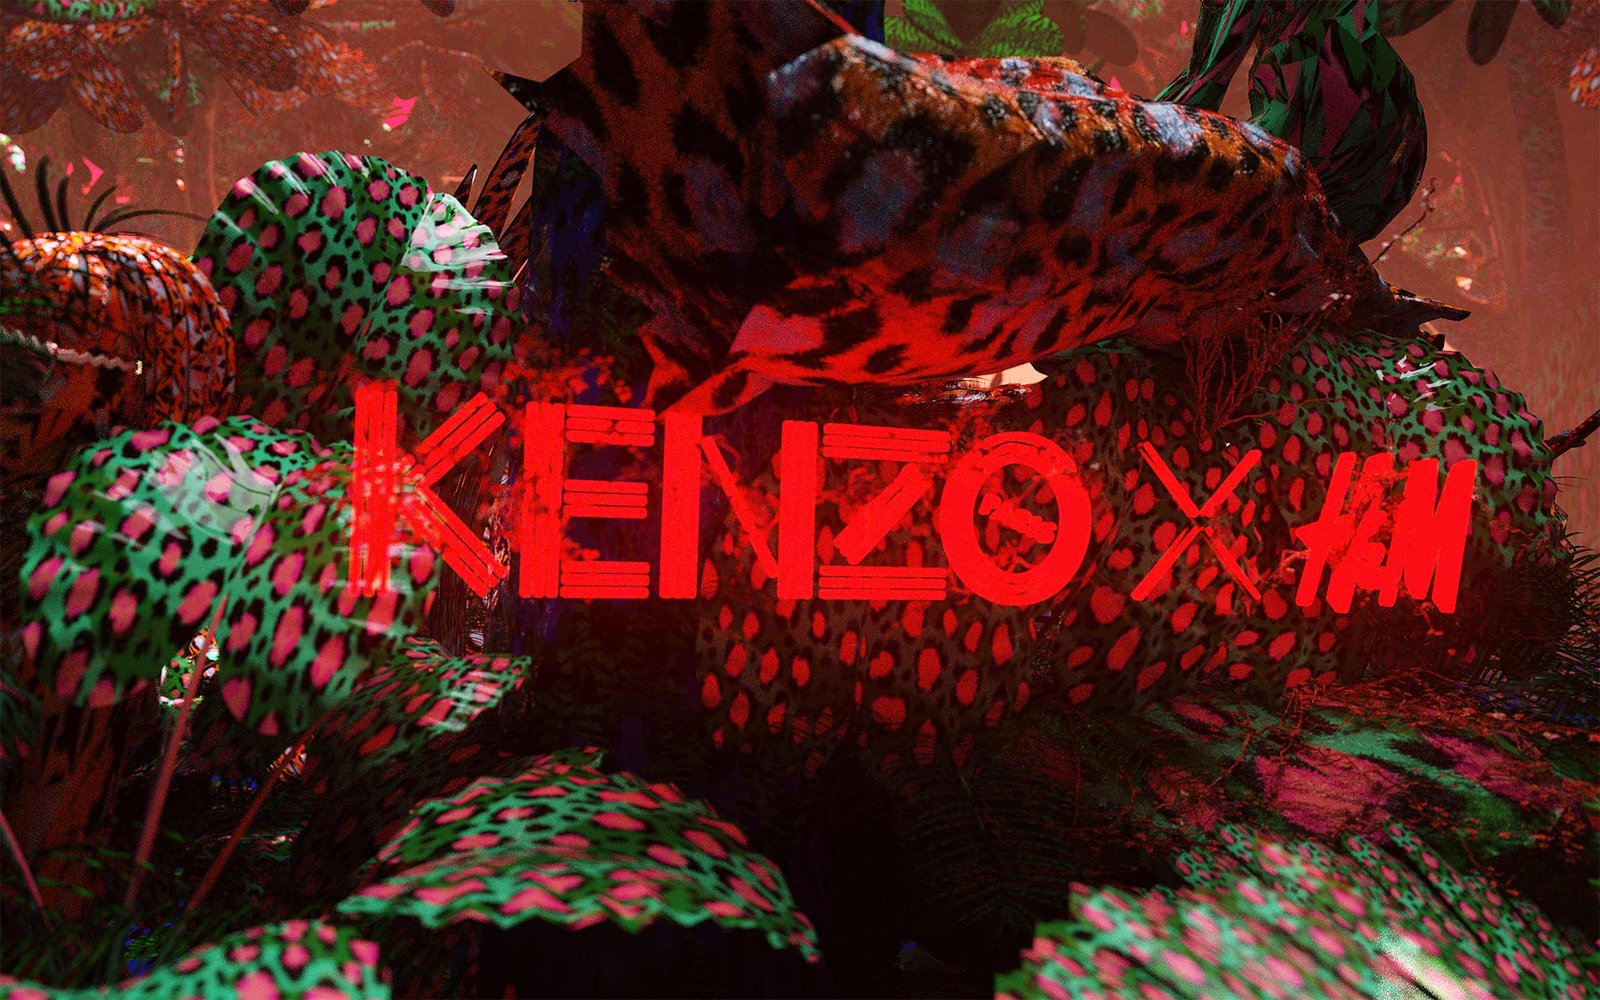 kenzo h&m collaboration